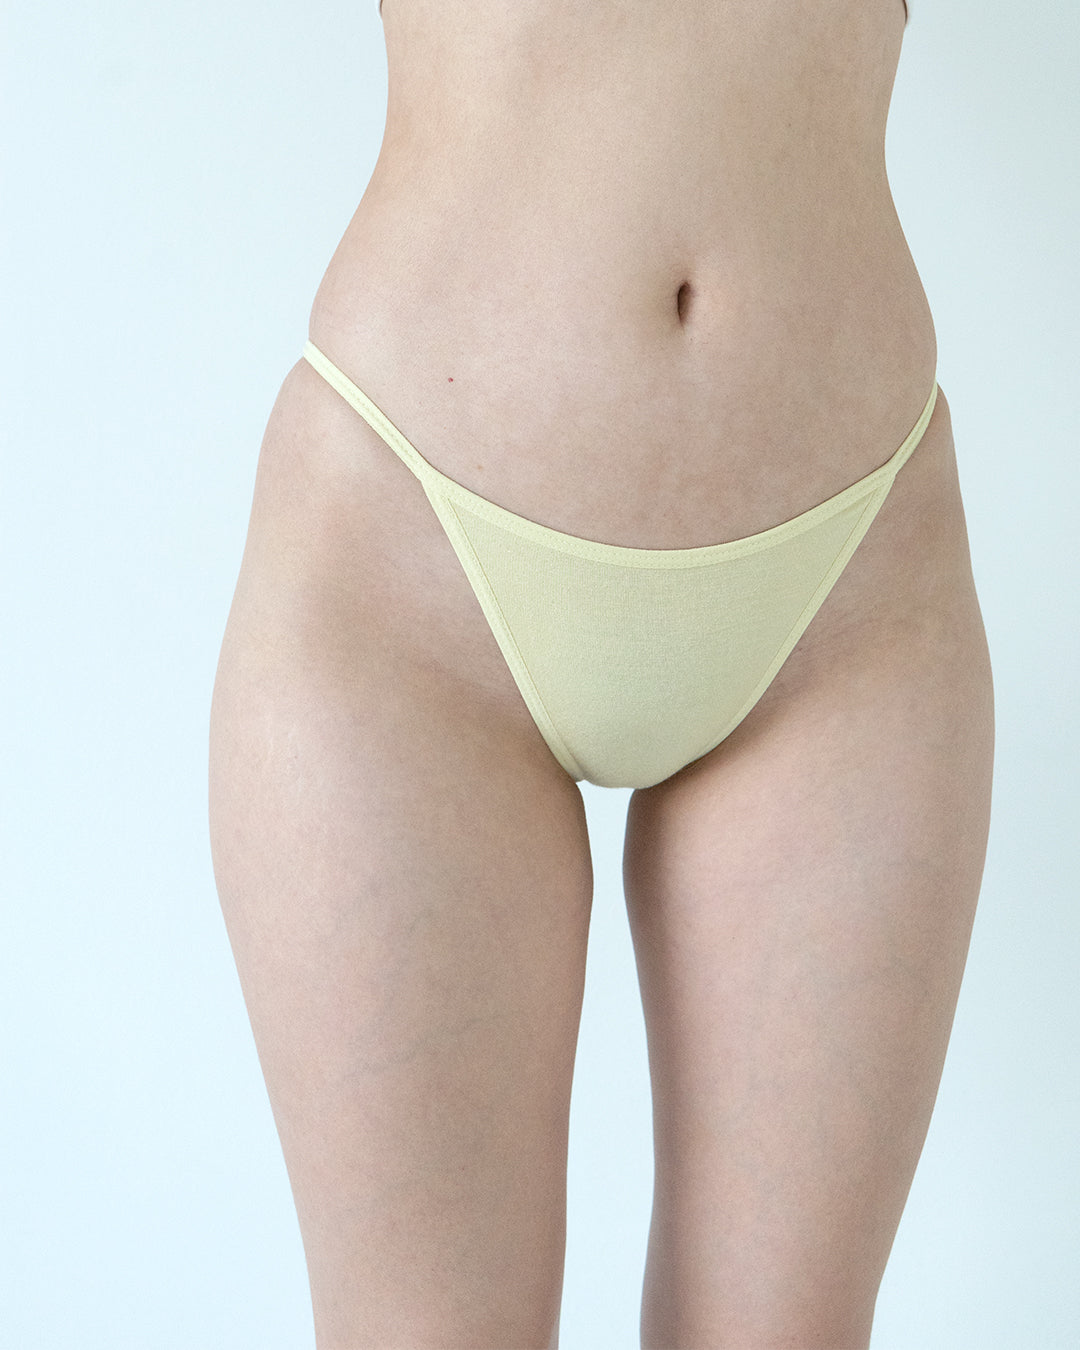 string bikini style panty in lemon yellow